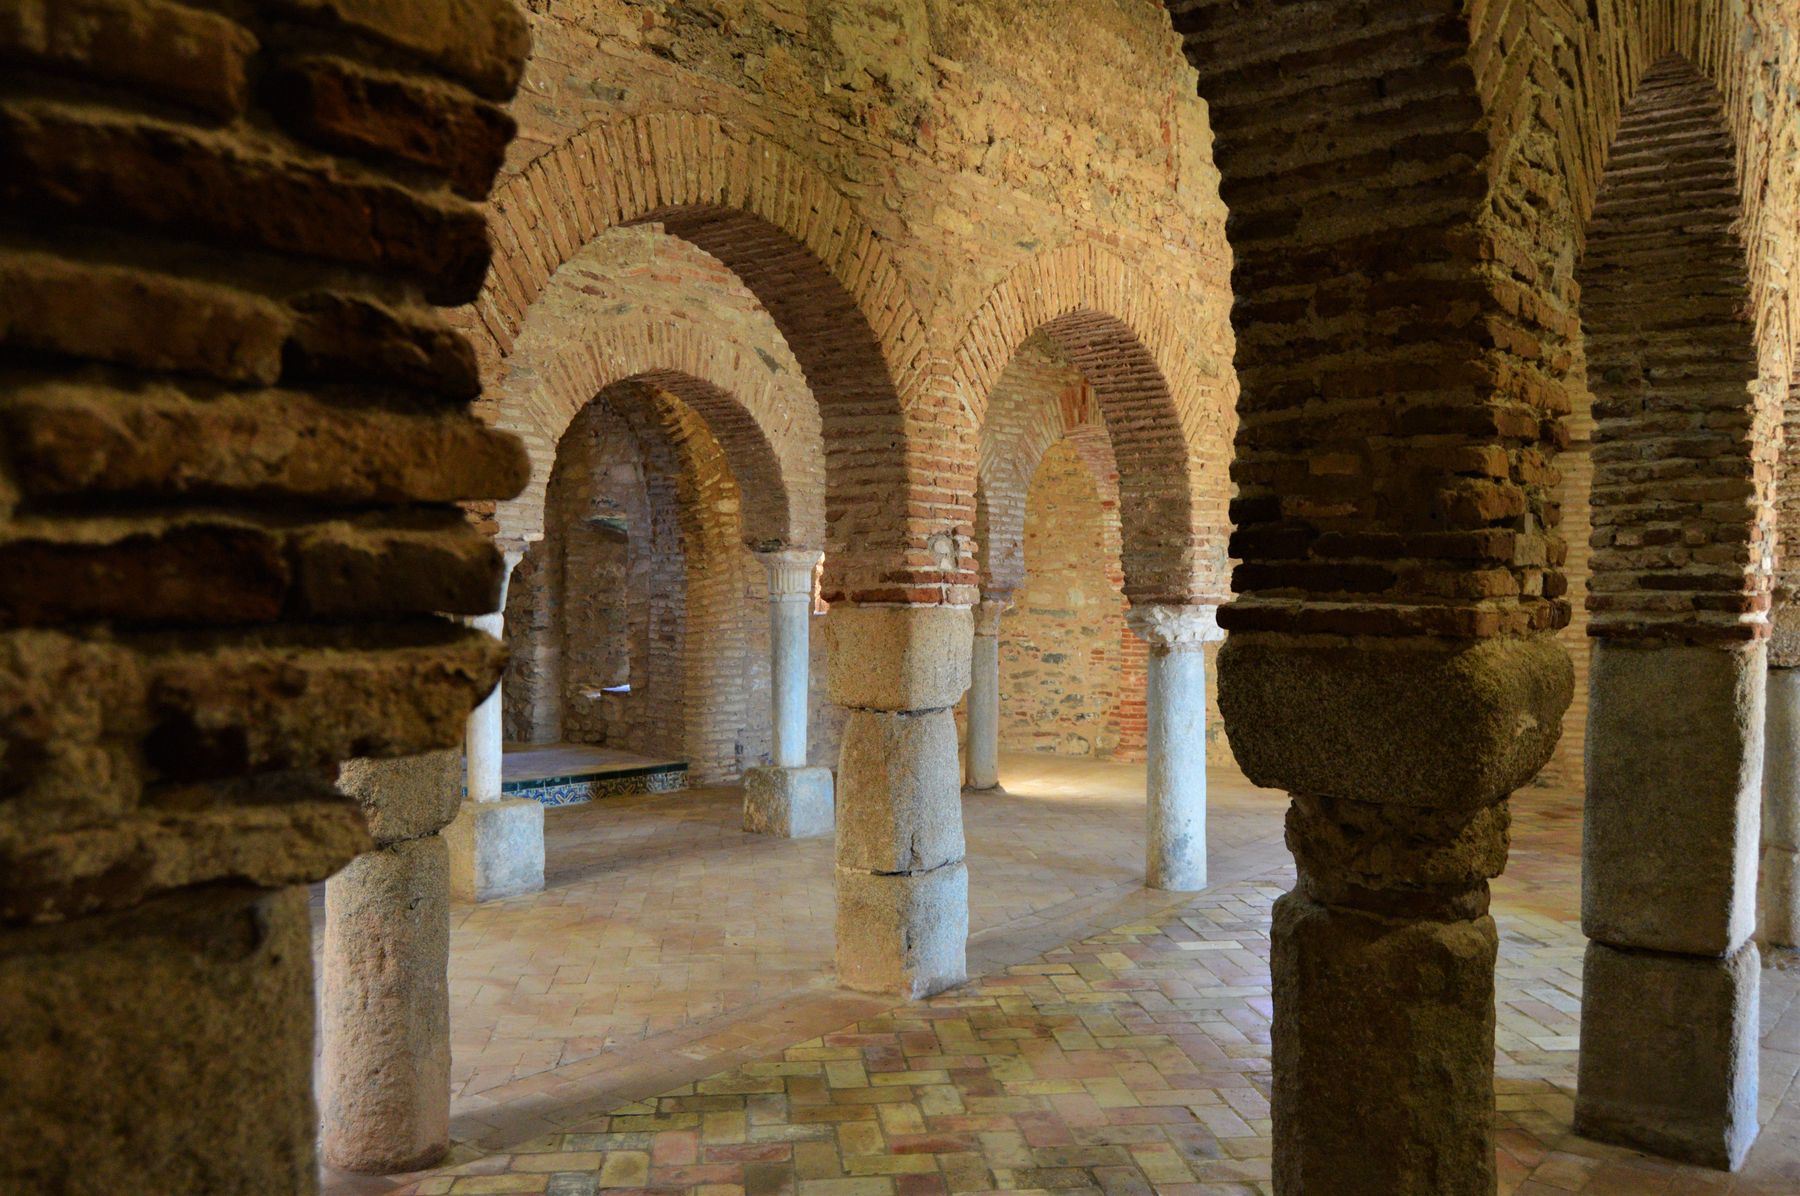 Ruta La Sierra Romana y Medieval - Huelva Experiences